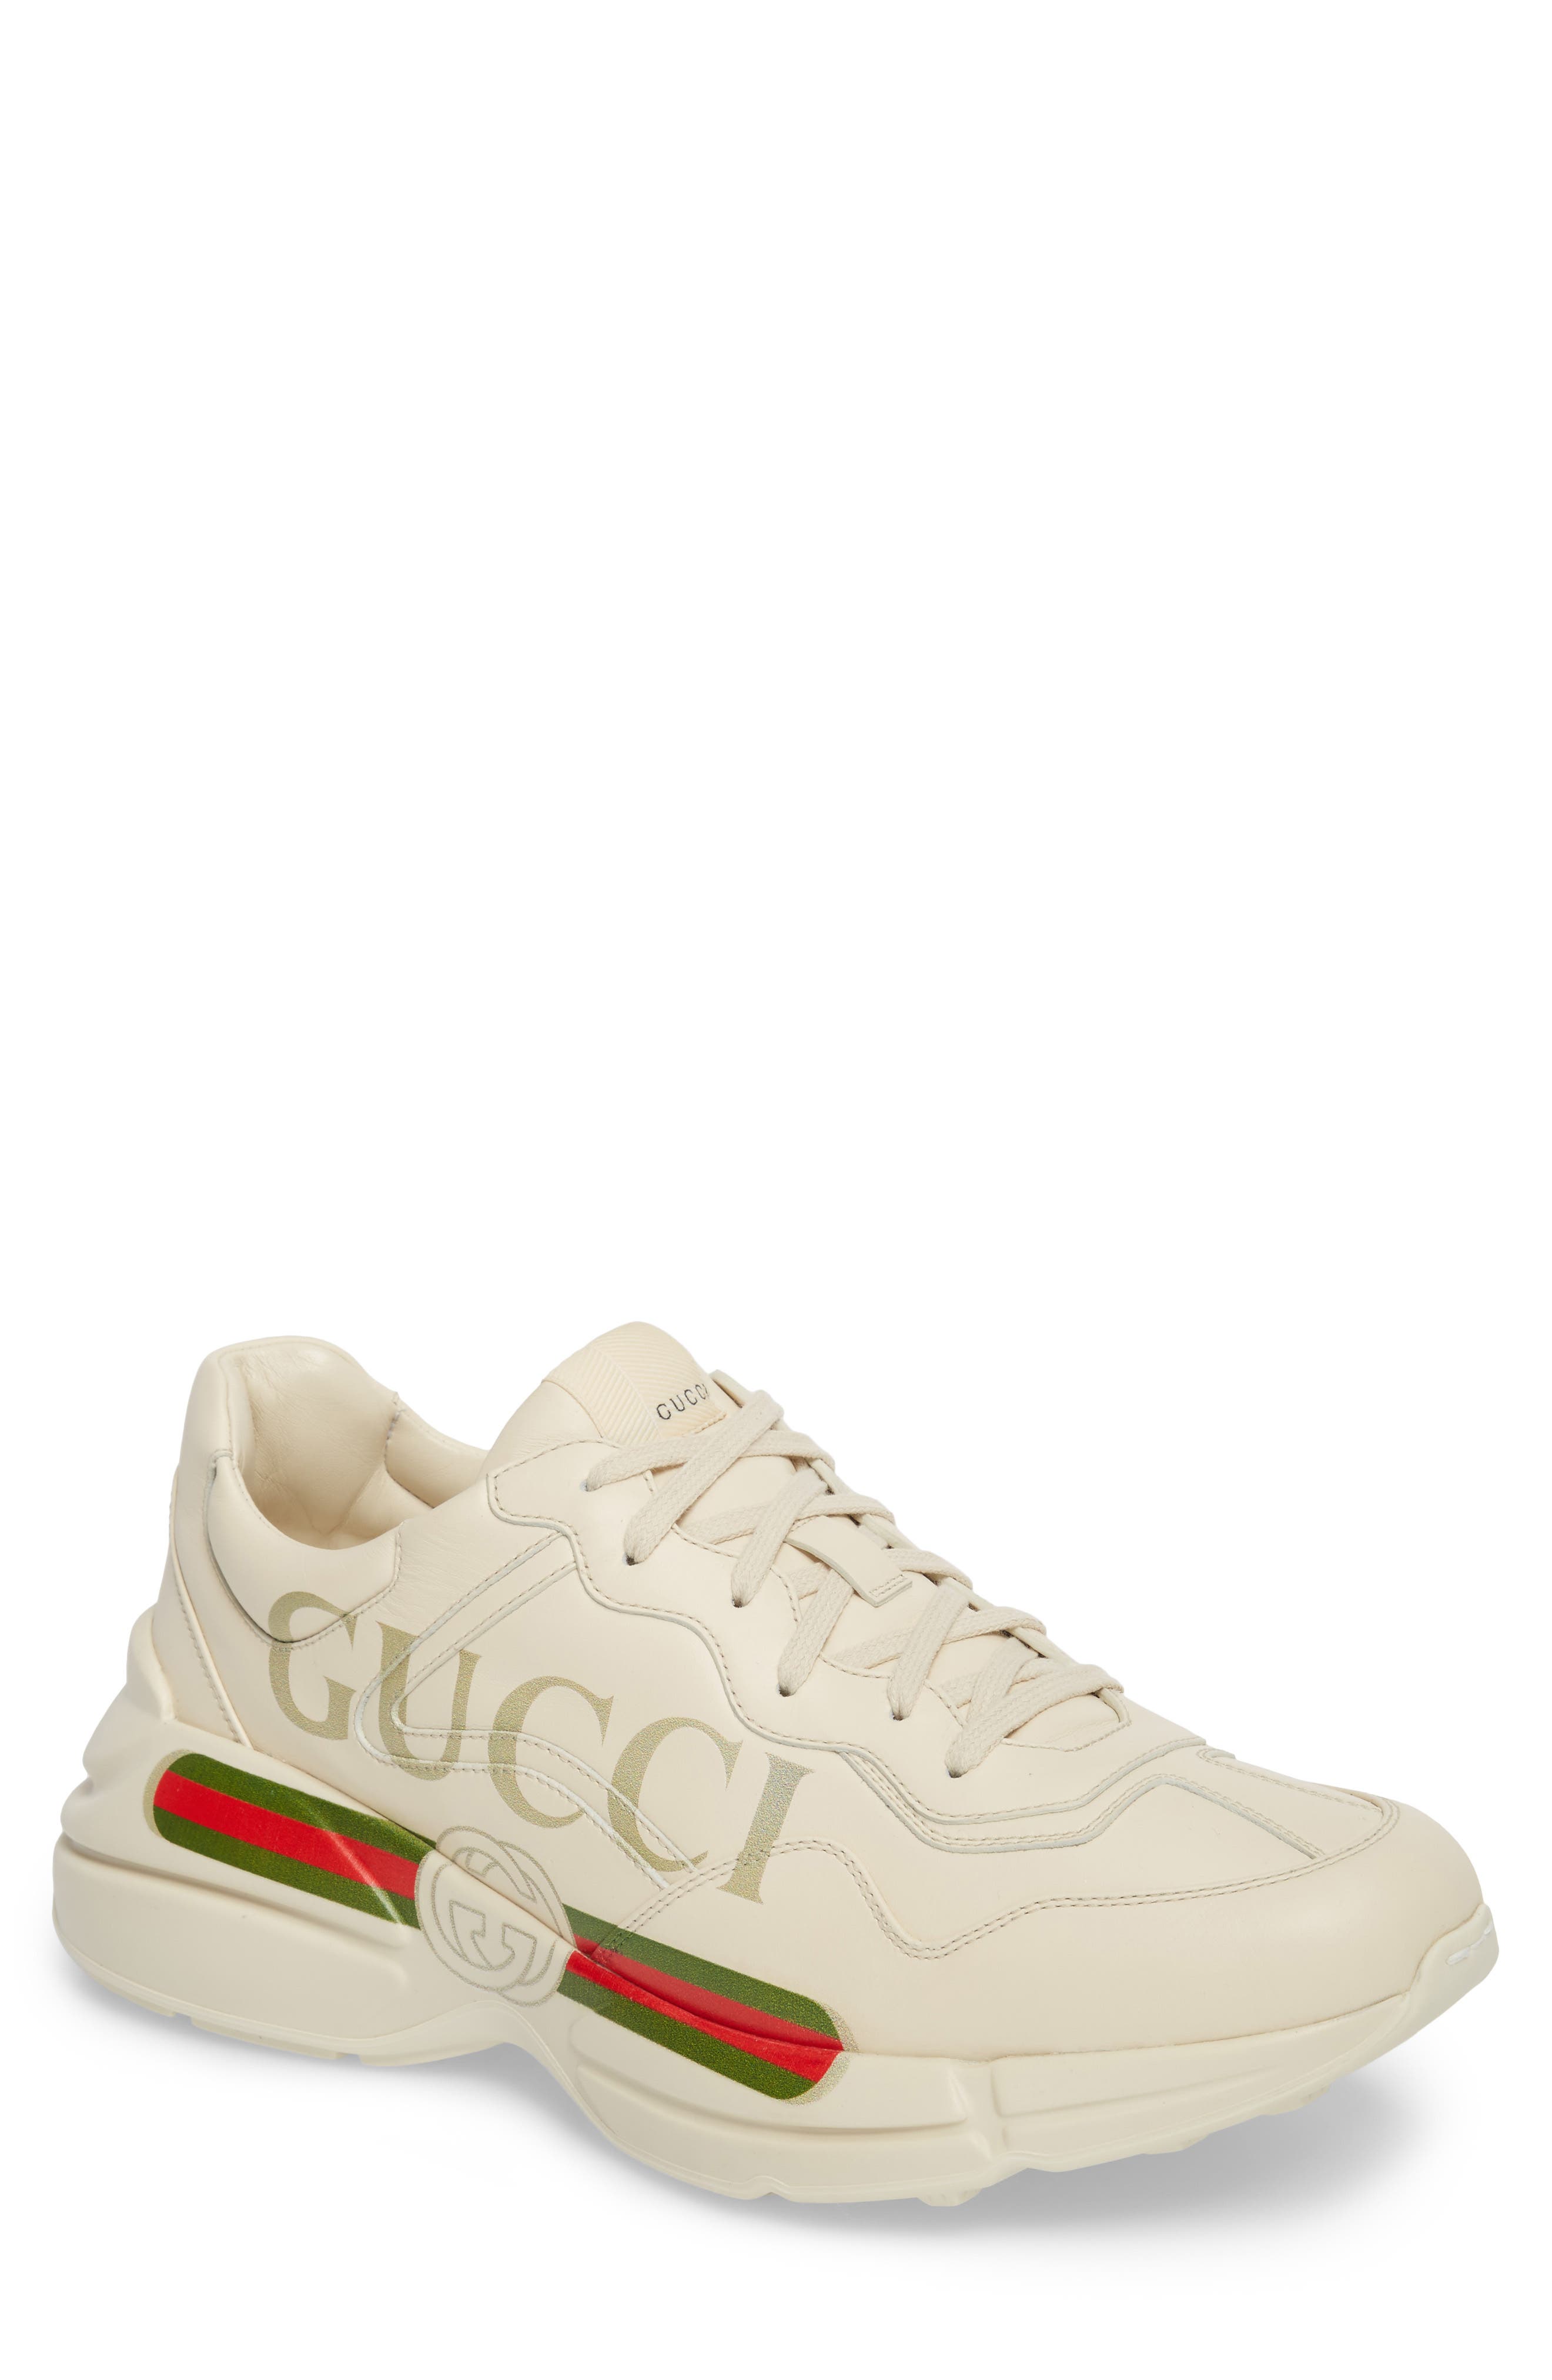 gucci logo leather sneaker